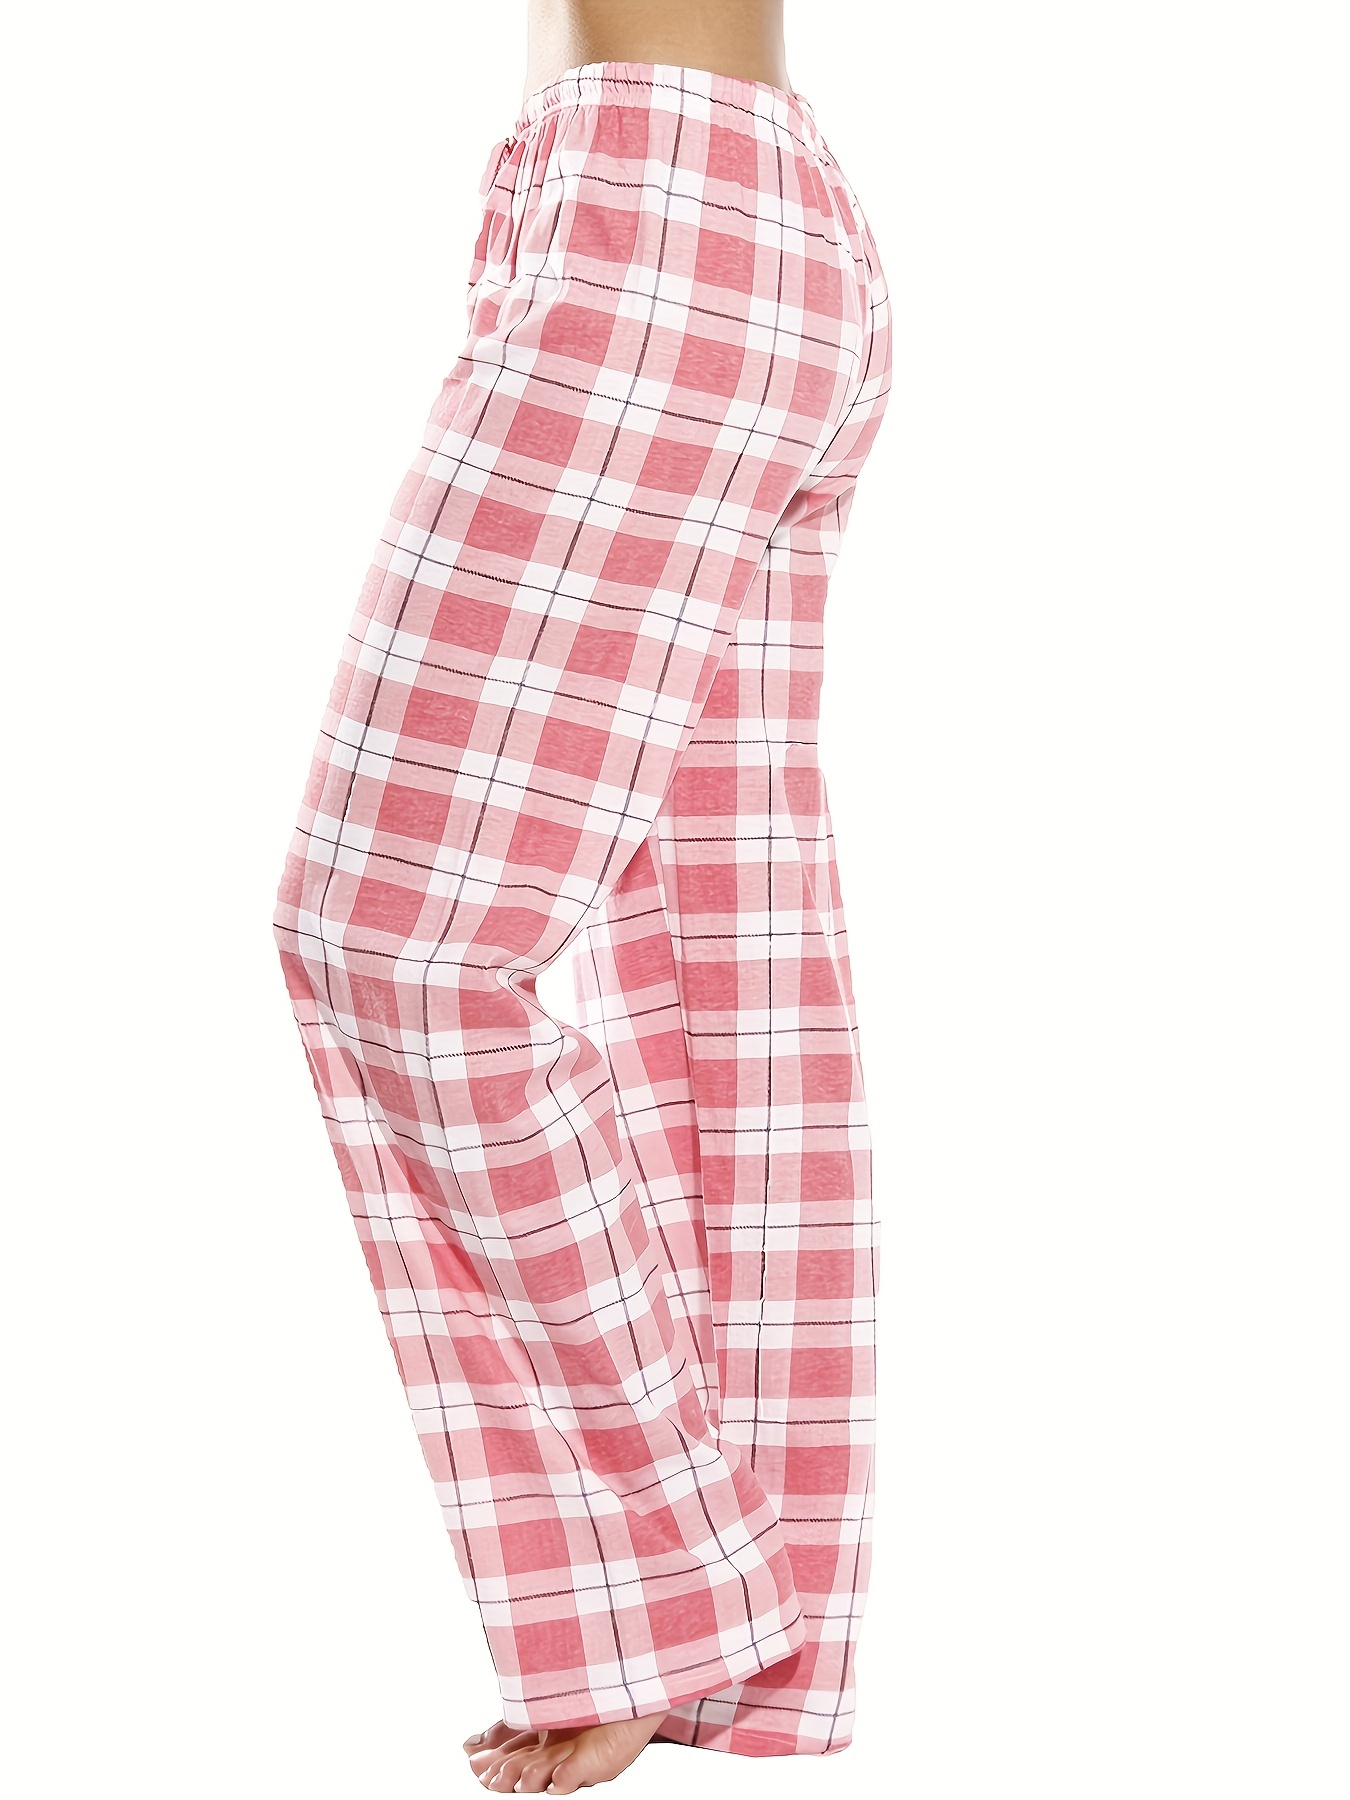 Women Plaid Pajama Pants Sleepwear, Women Lounge Pants Comfy